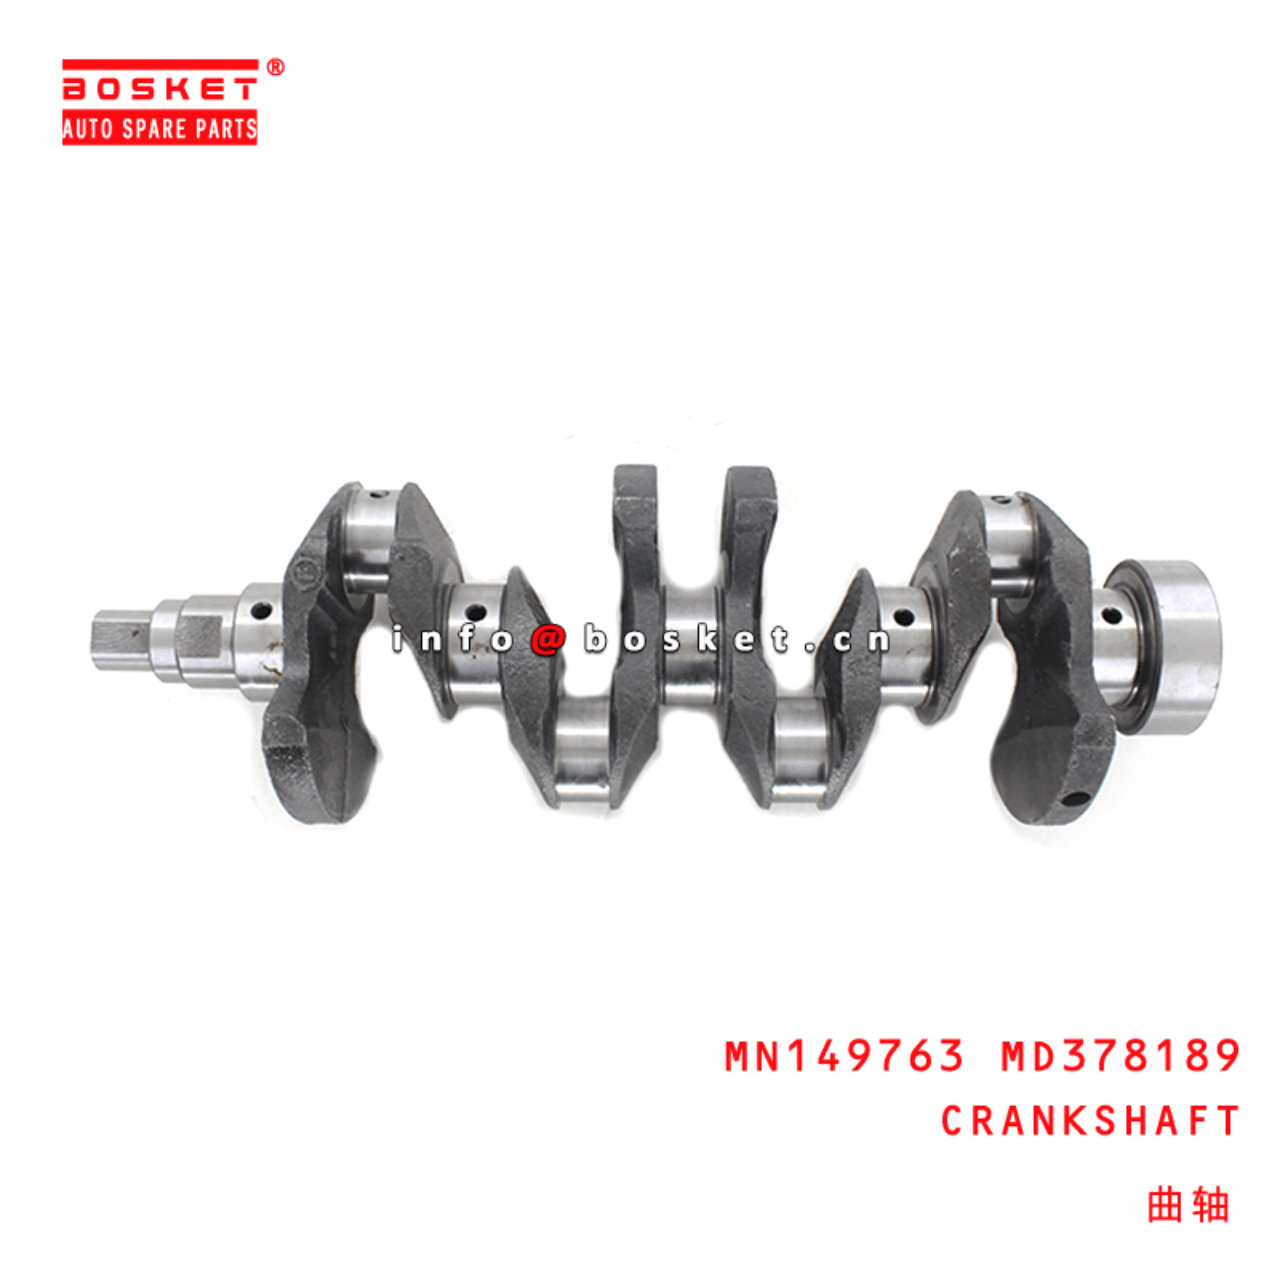 MN149763 MD378189 Crankshaft Suitable For MITSUBISHI FUSO 4G13 